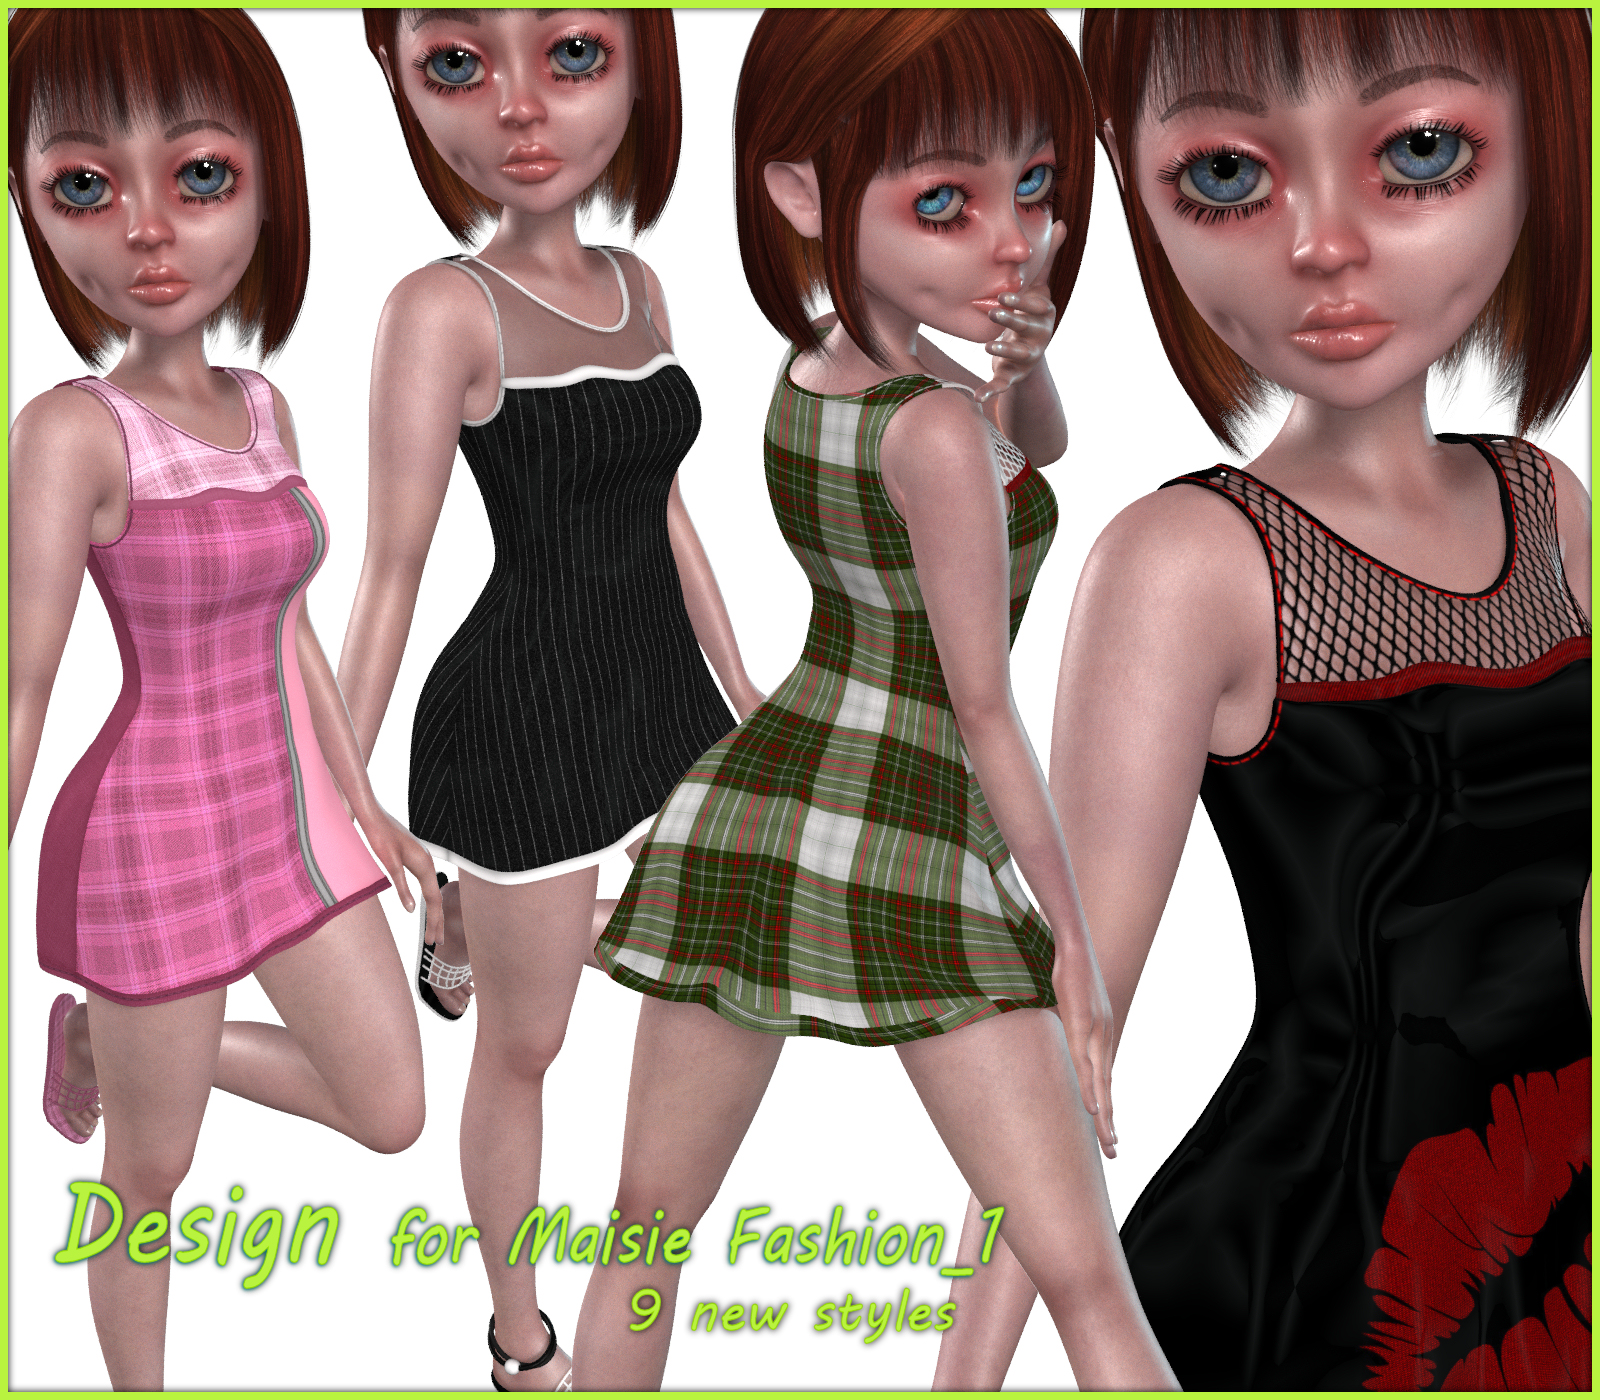 Designs for Maisie Fashion 1